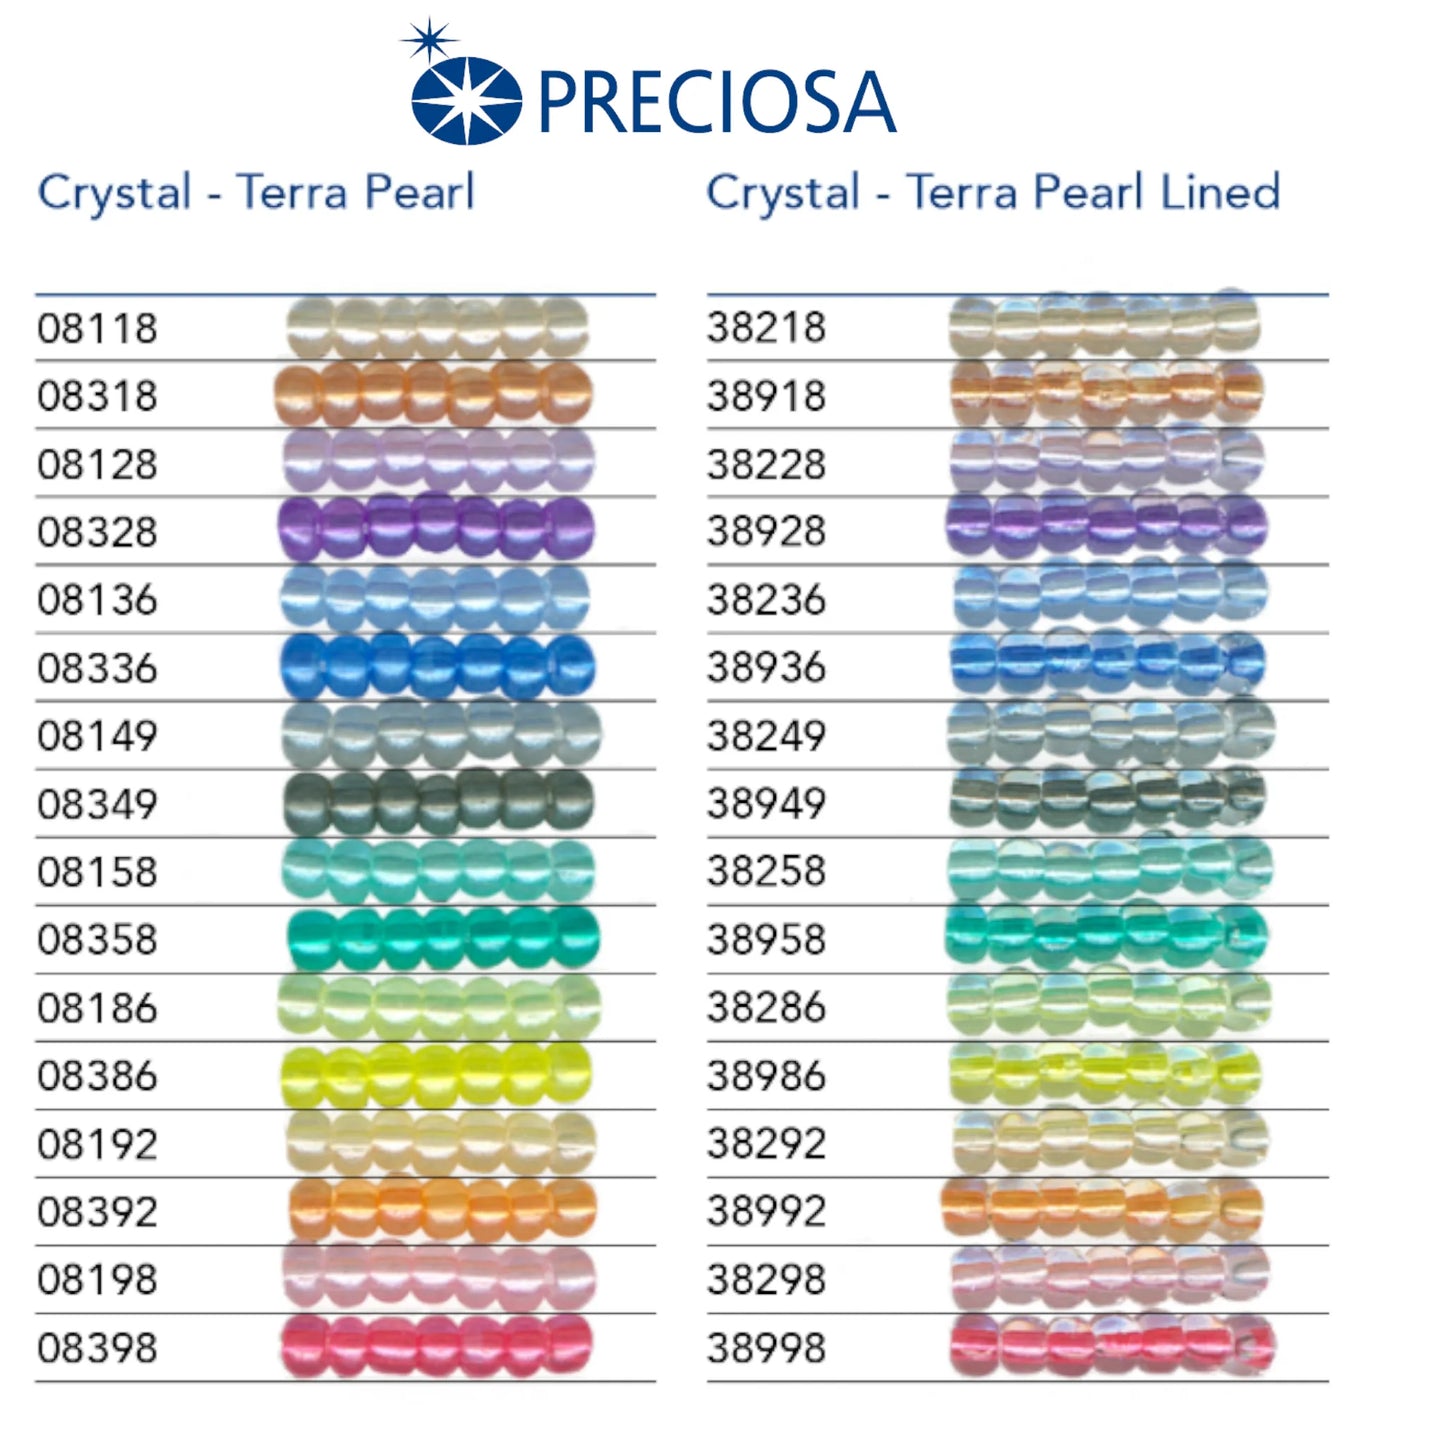 38236 Czech seed beads PRECIOSA Rocailles 10/0 light blue. Crystal - Terra Pearl Lined.